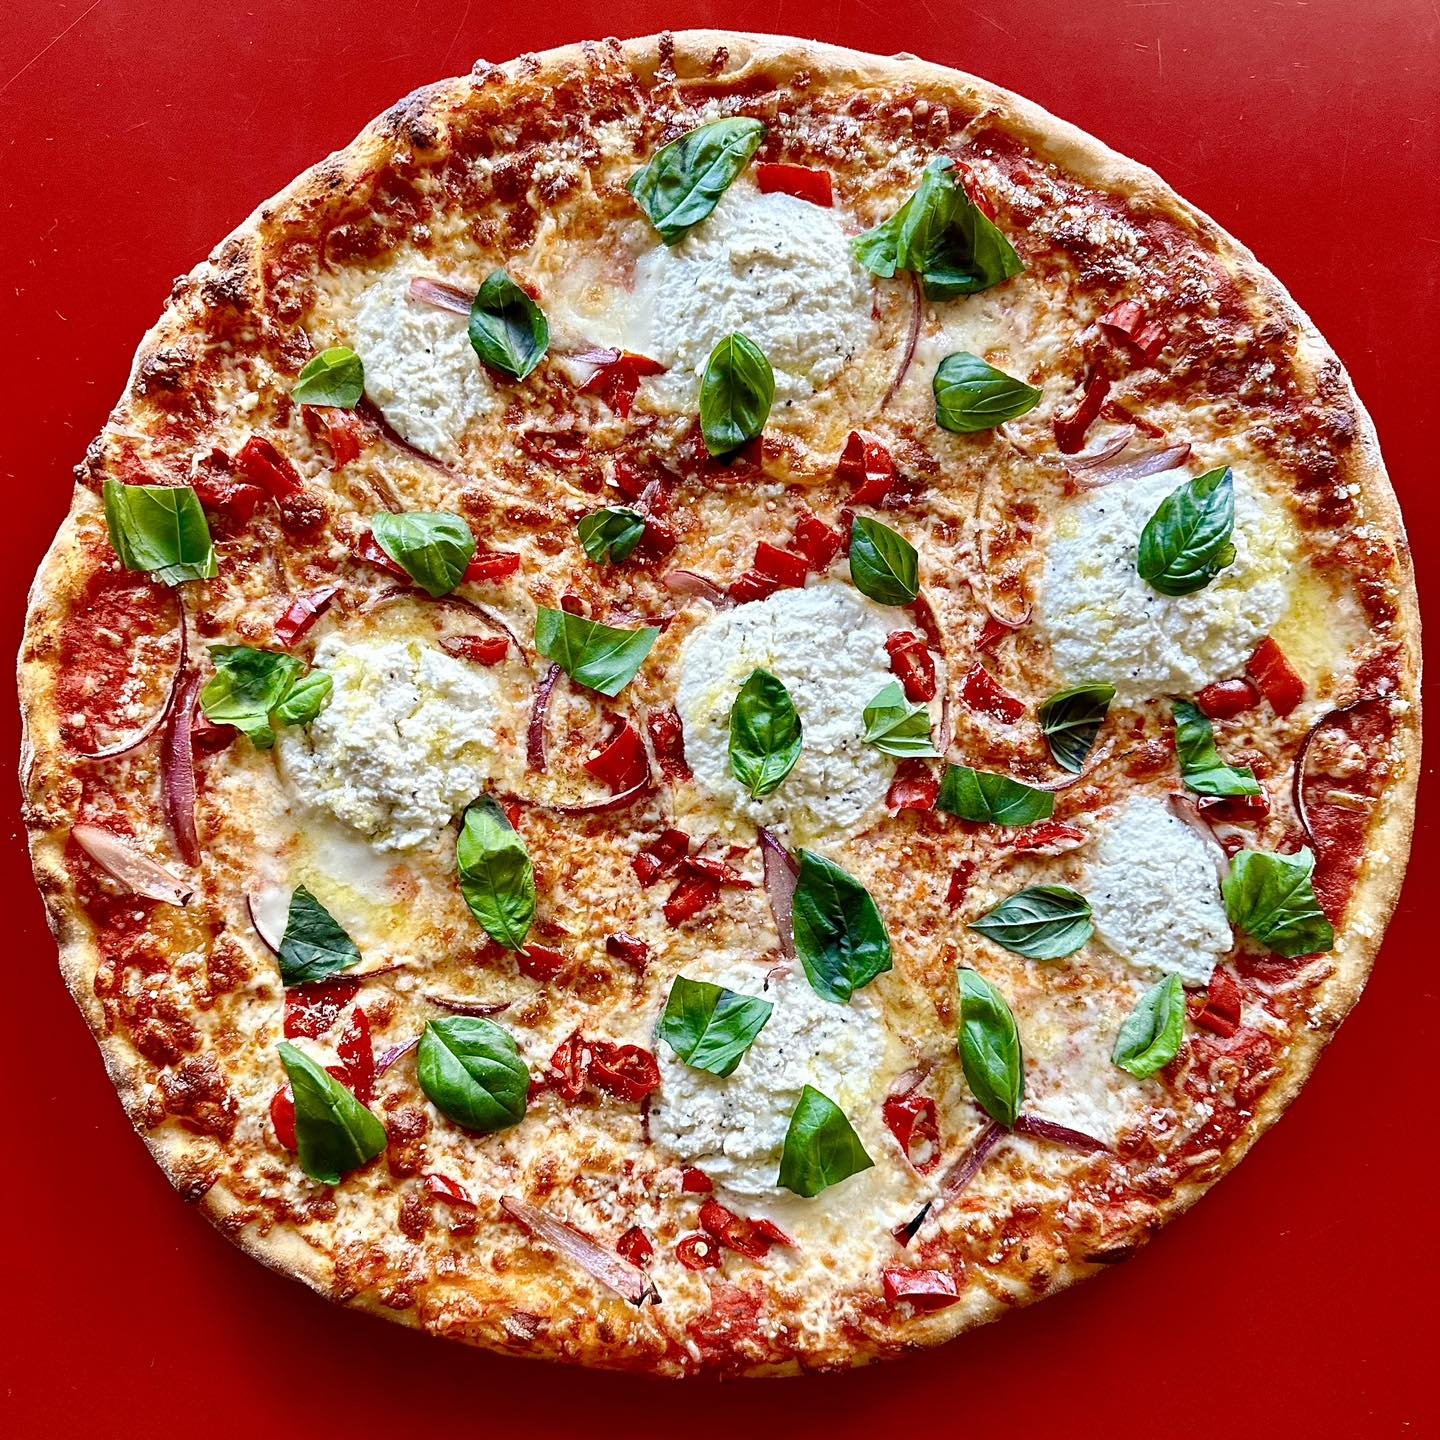 ⚪️🌱 New Feature 🌱⚪️
&lsquo;The Silent G&rsquo; : Marinara, Fior Di Latte, Shredded Mozzarella, Ricotta, Calabrian Chili, Stewed Red Onion, Basil

Available at our Winnipeg location. 
.
.
.
.
.
#winnipeg #pizza #pizzadelivery #featurepizza #shortysp